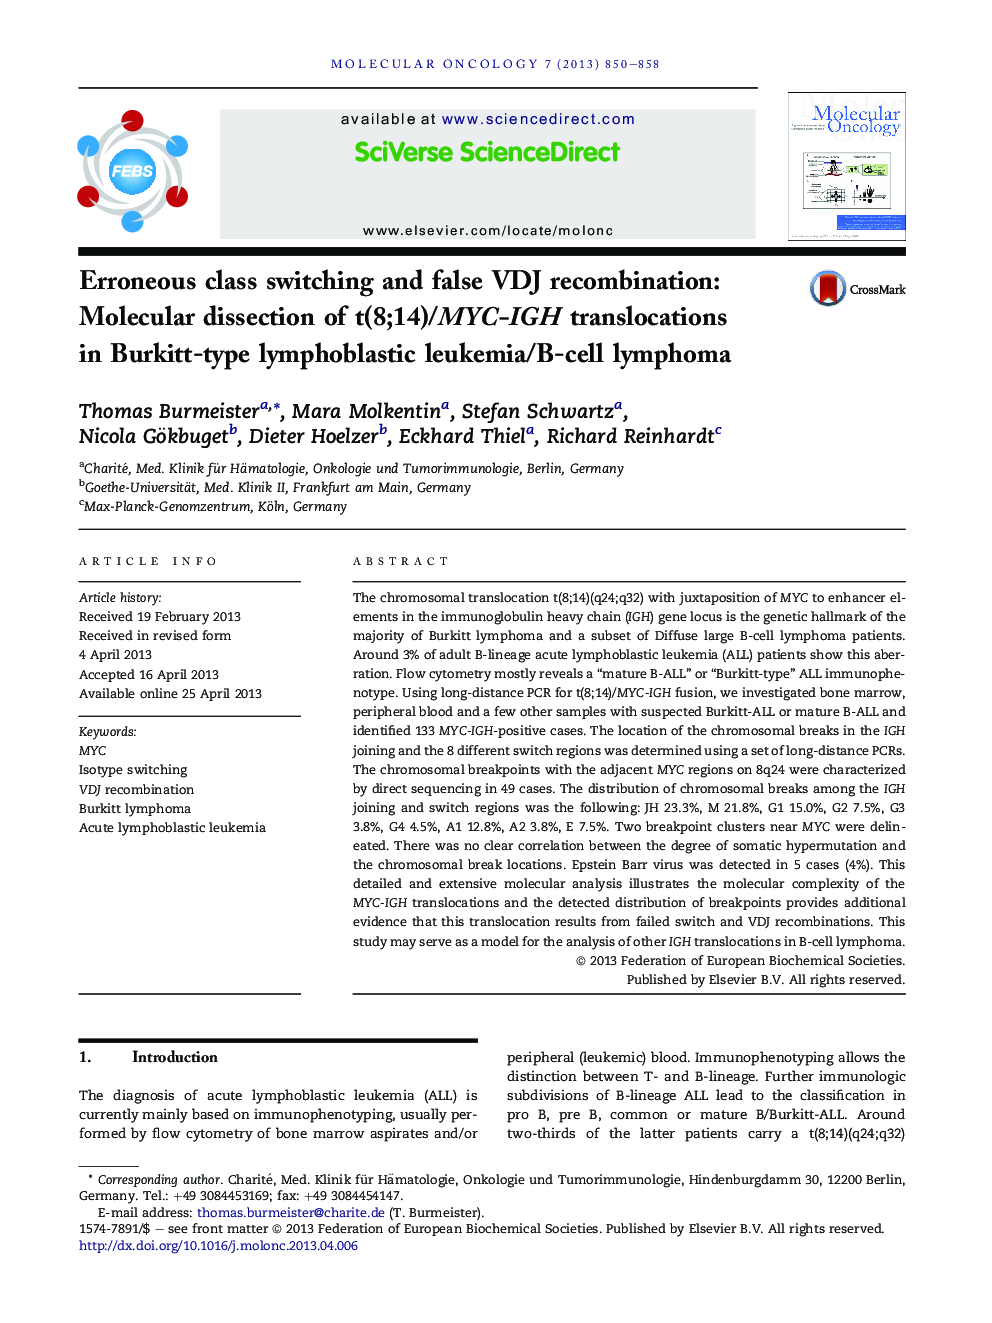 Erroneous class switching and false VDJ recombination: Molecular dissection of t(8;14)/MYC-IGH translocations in Burkitt-type lymphoblastic leukemia/B-cell lymphoma